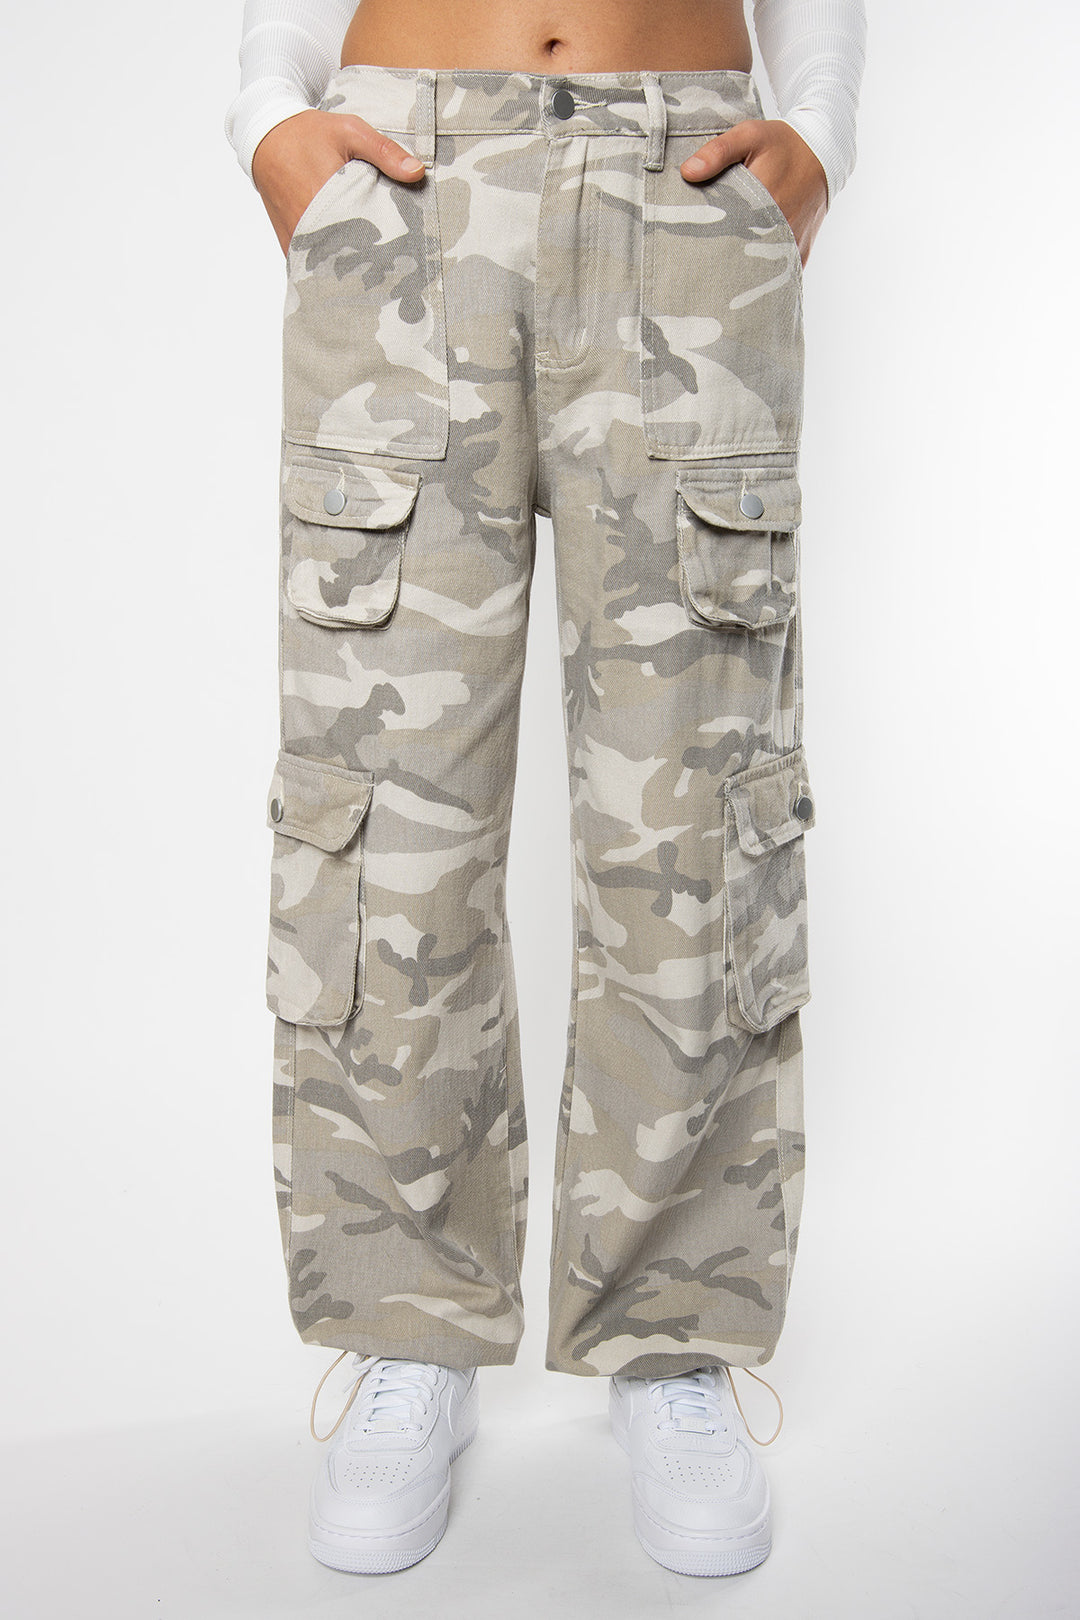 Gracelynn Camouflage Cargo Parachute Pants Pants Routines Fashion   